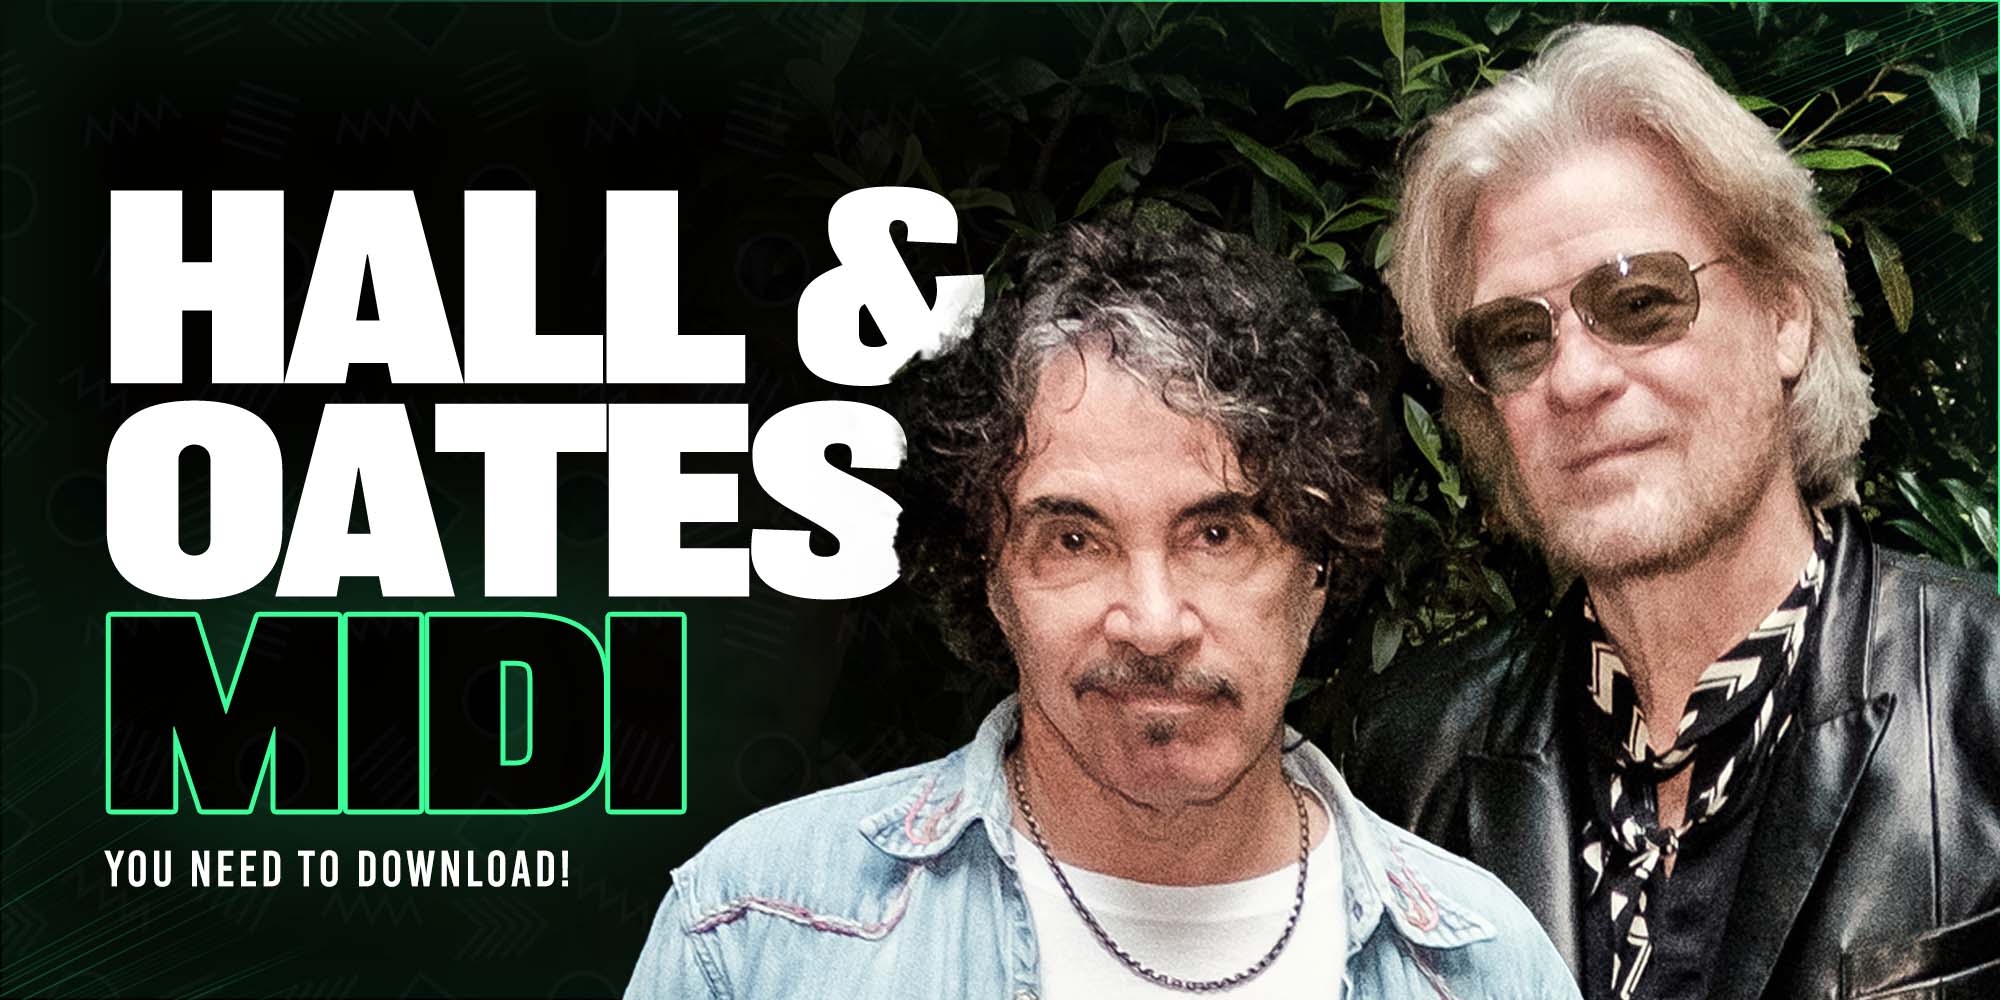 Daryl Hall & John Oates - Dreams Come True Midi Free